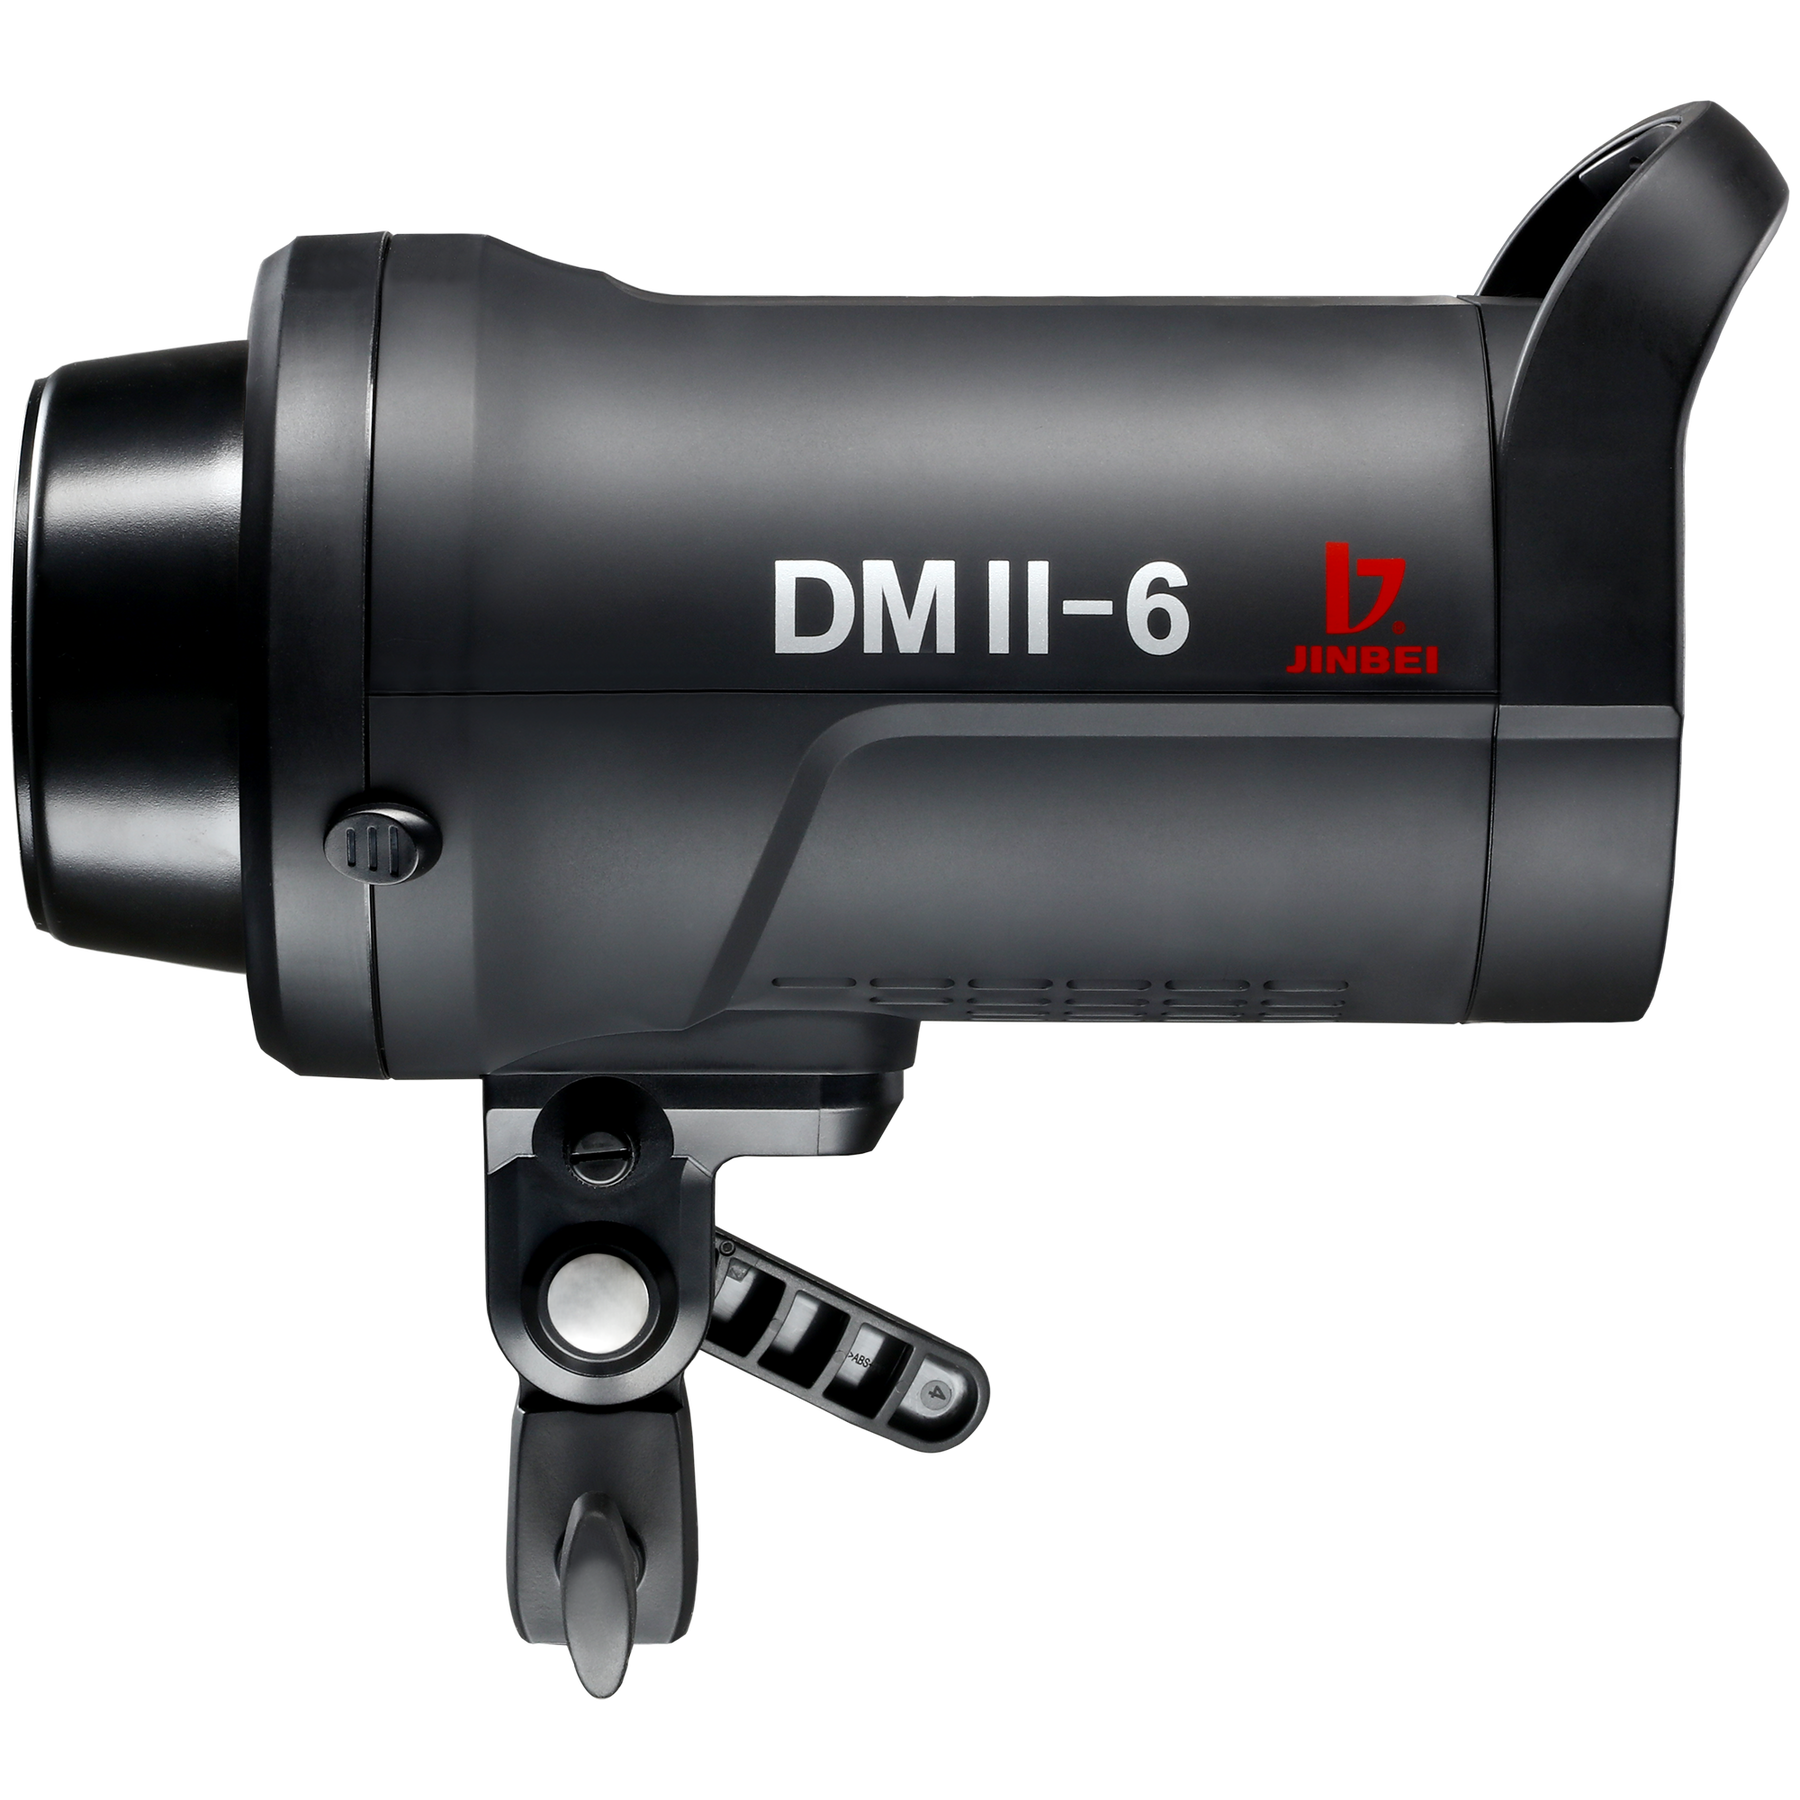 DMII-6 studio flash